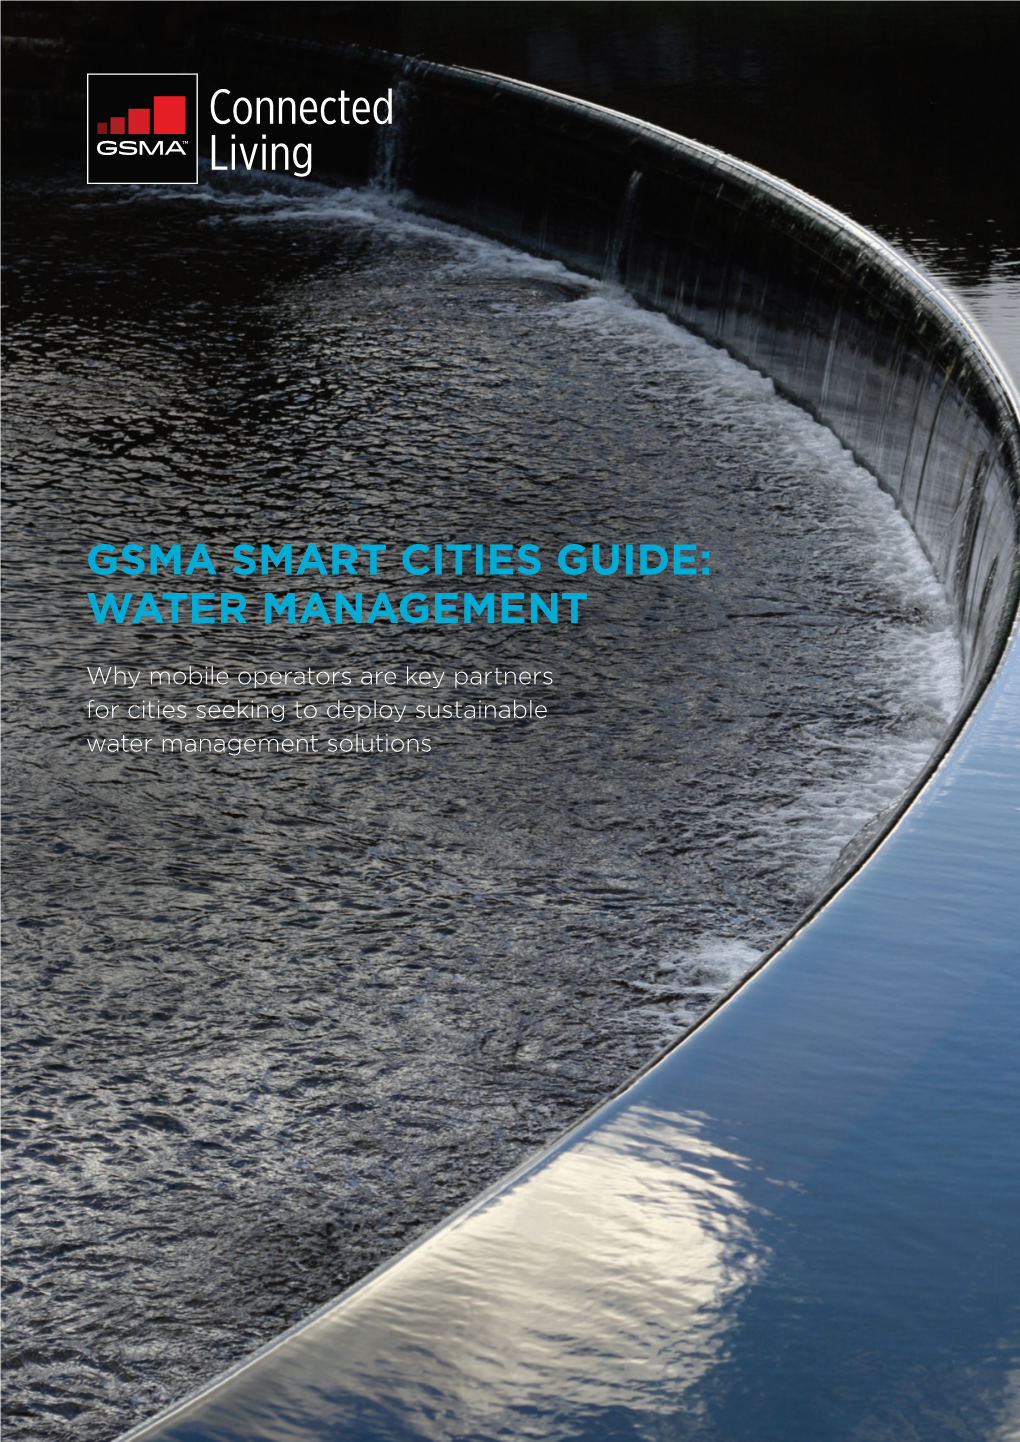 GSMA Smart Cities Guide: Water Management